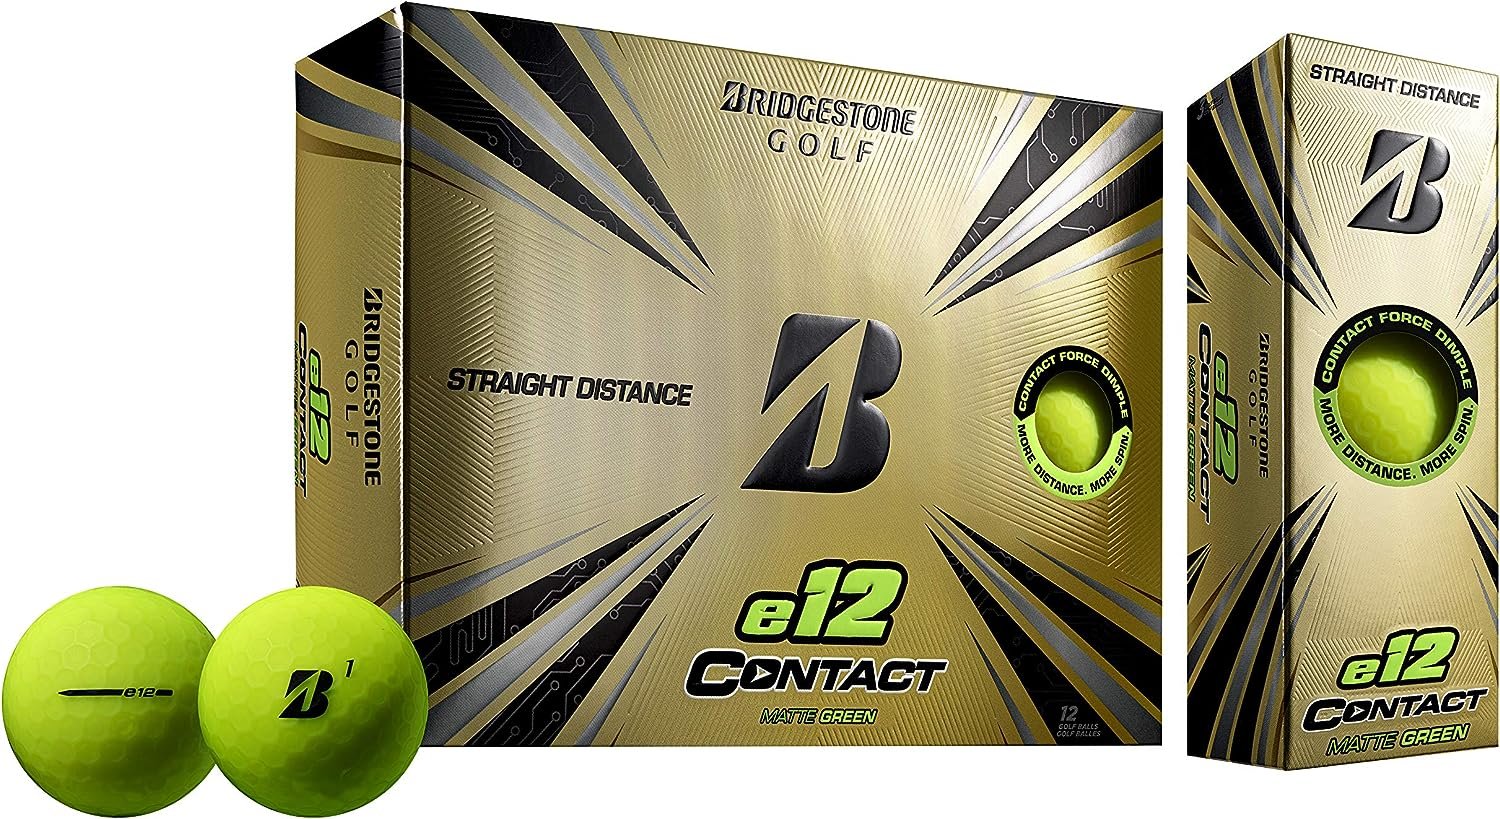 Bridgestone Golf 2021 e12 Contact Golf Balls, White, 2021 Model, One Size, 12 count (Pack of 1)